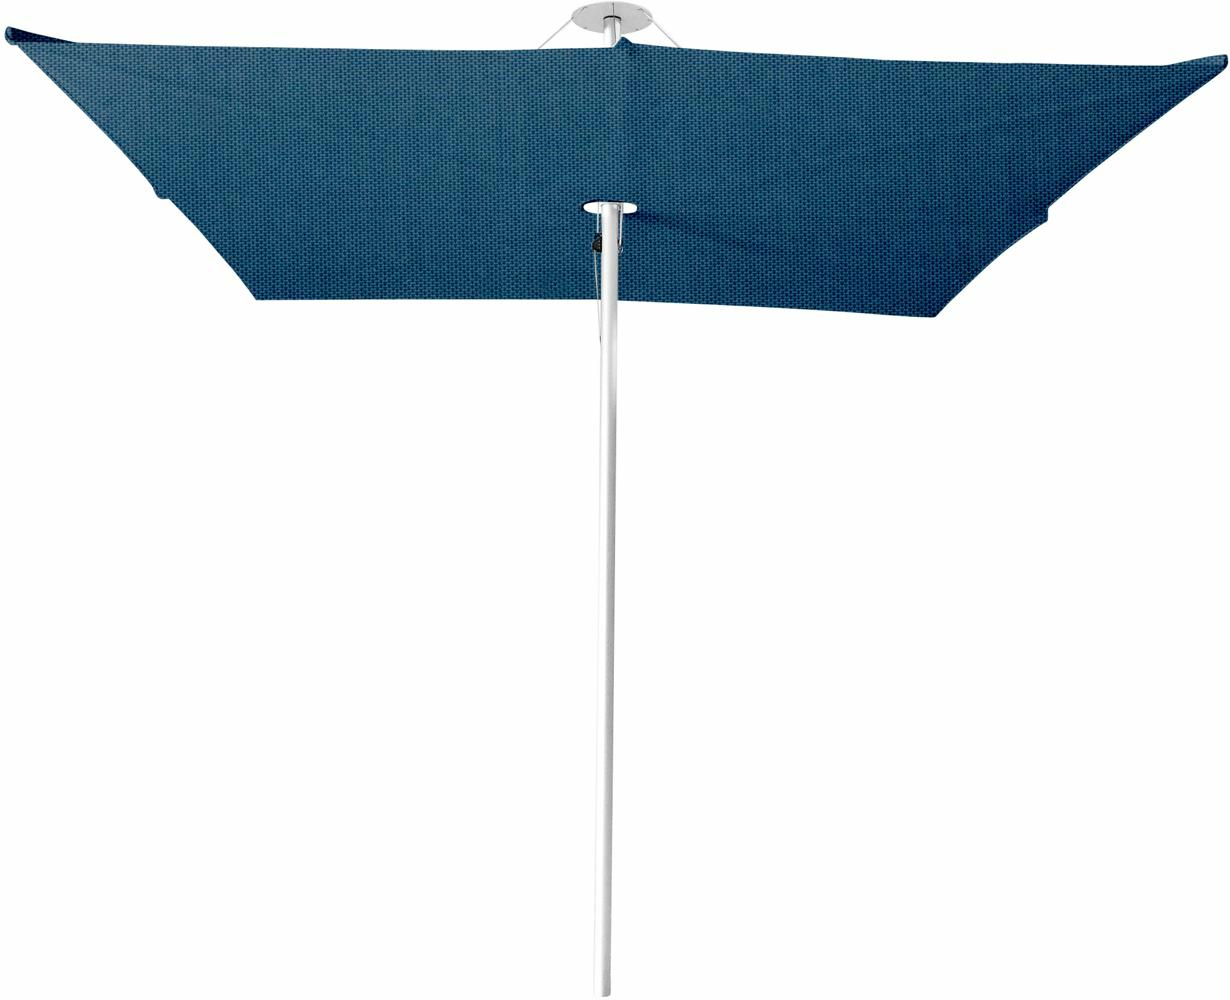 Infina center post umbrella, 3 m square, with frame in Aluminum and Colorum BlueStorm canopy.